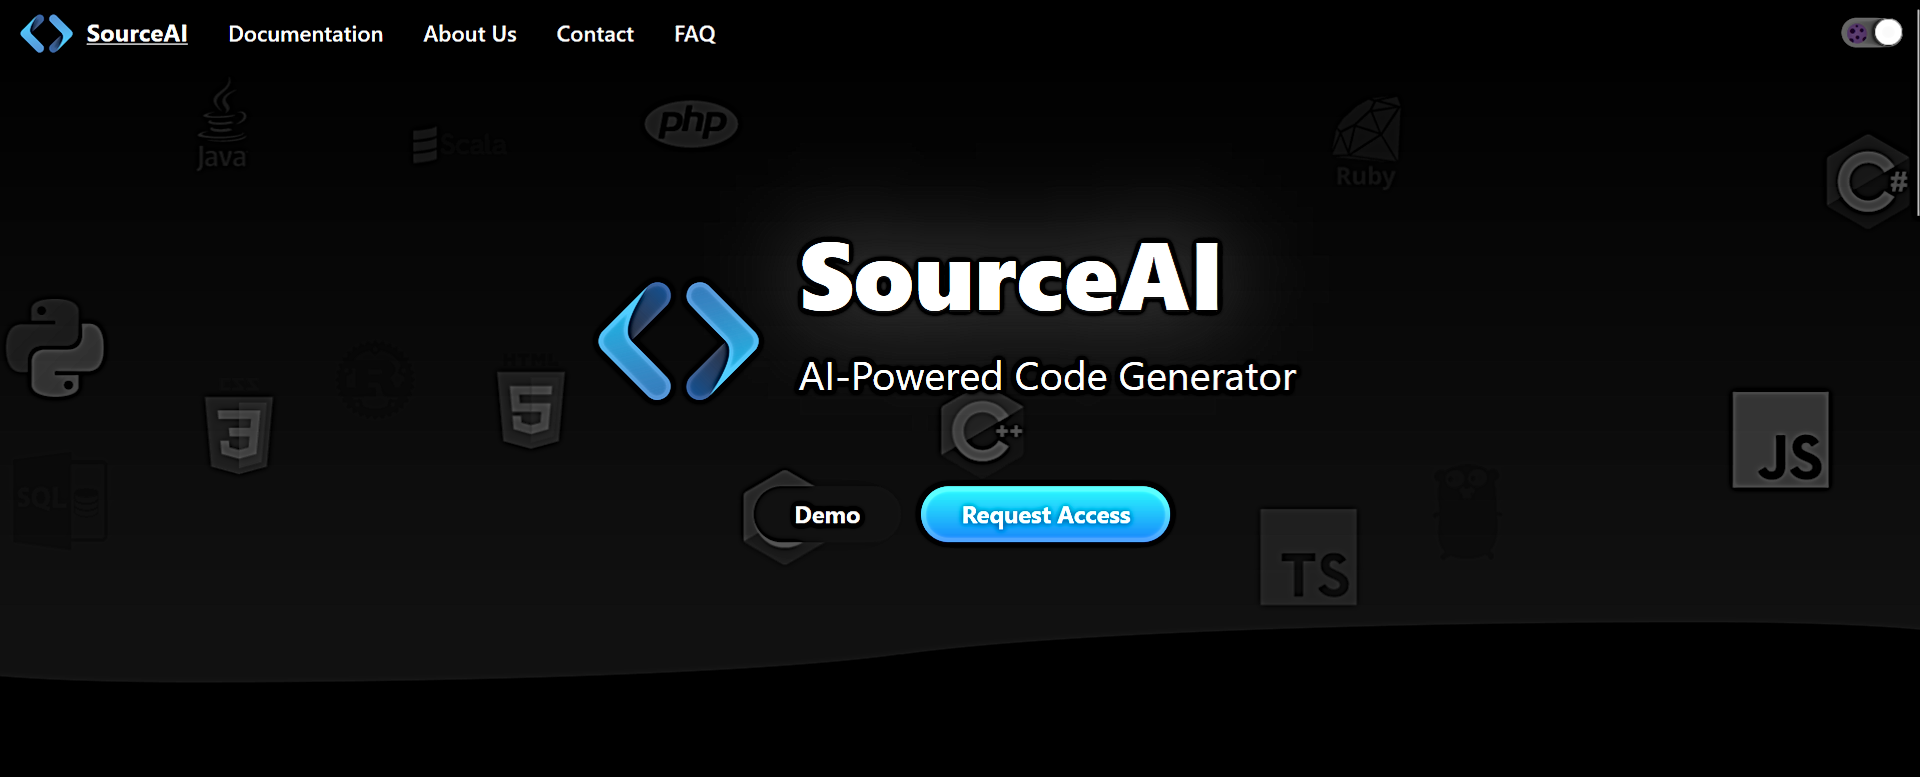 SourceAI featured